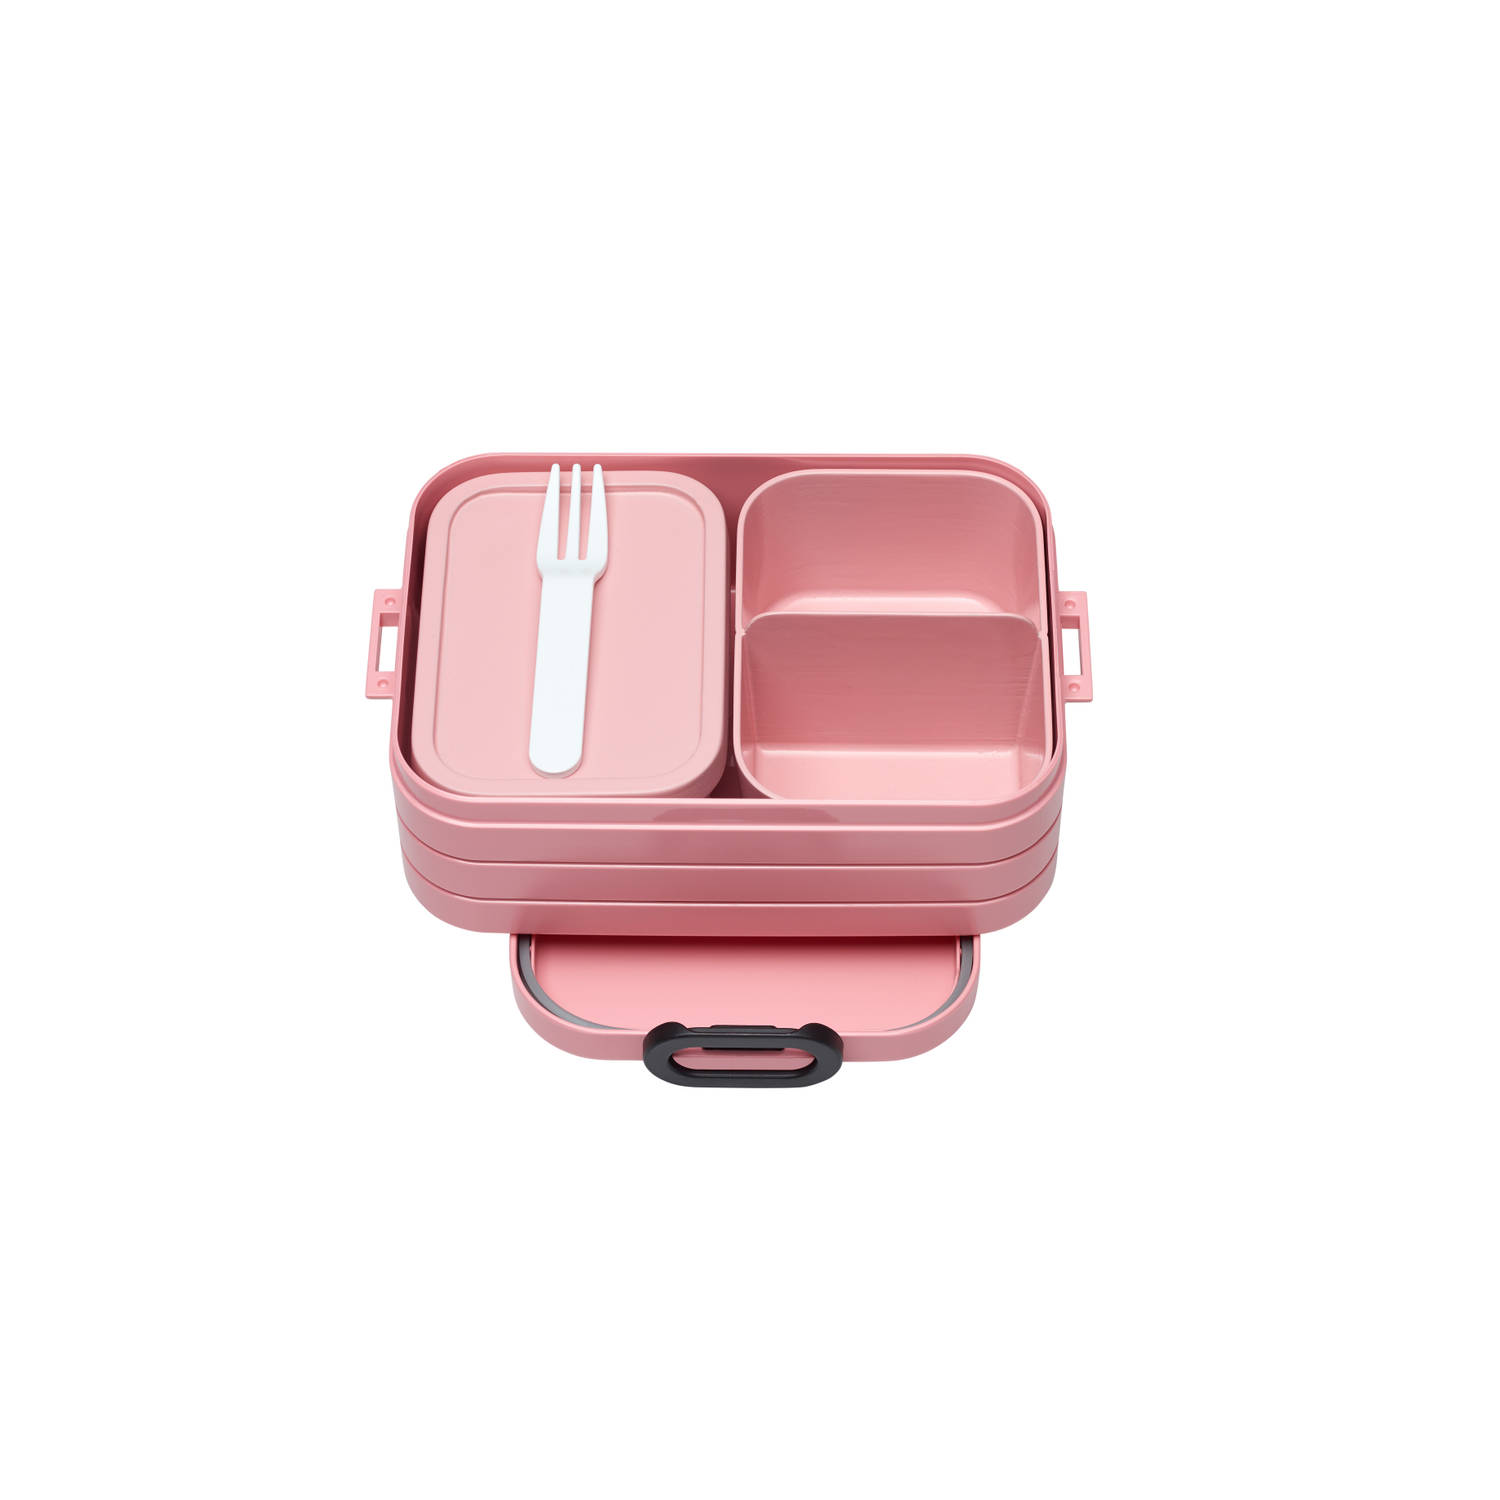 moe aankunnen Onenigheid Mepal Bento lunchbox Take a Break midi - Nordic pink | Blokker